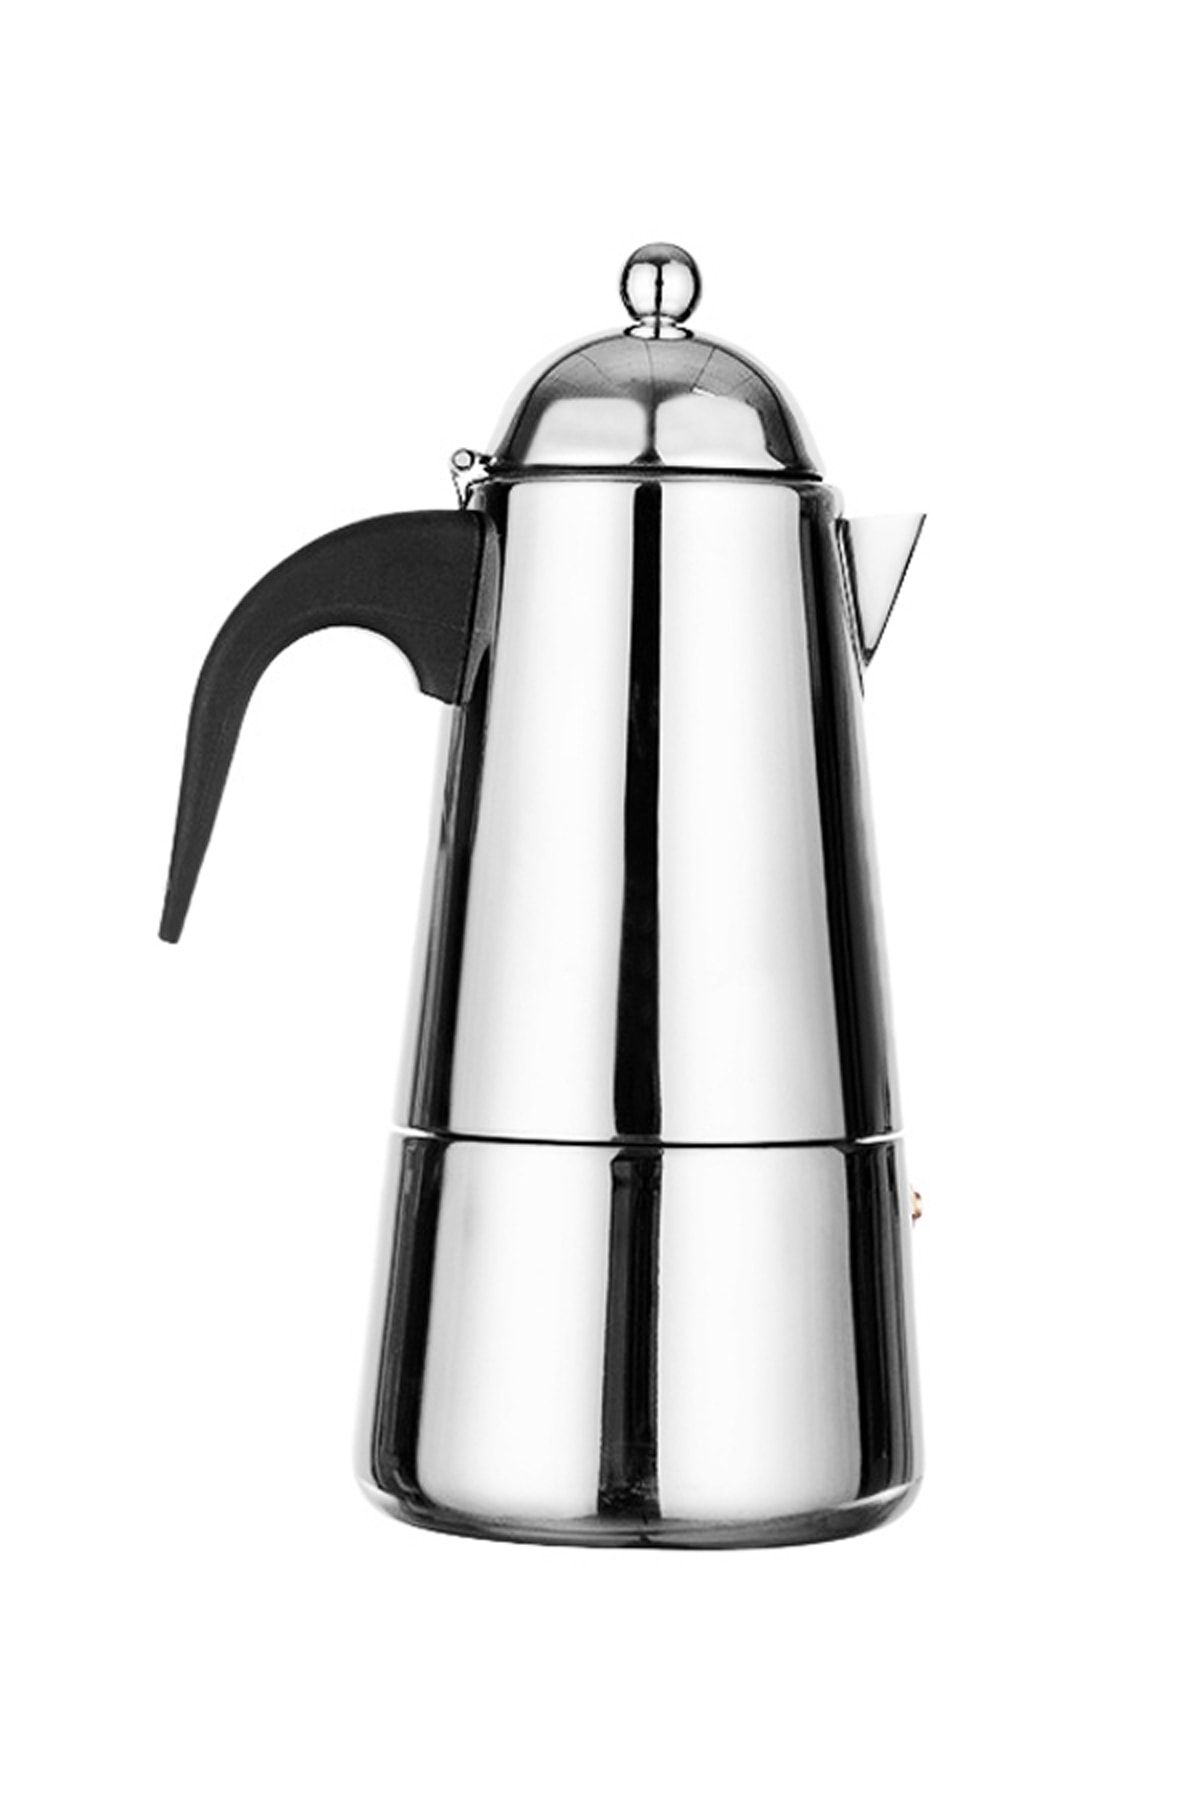 Weather Forecast Paslanmaz Çelik Ocak Üstü 6 Cup Fincan Moka Pot Espresso Cin321-9x